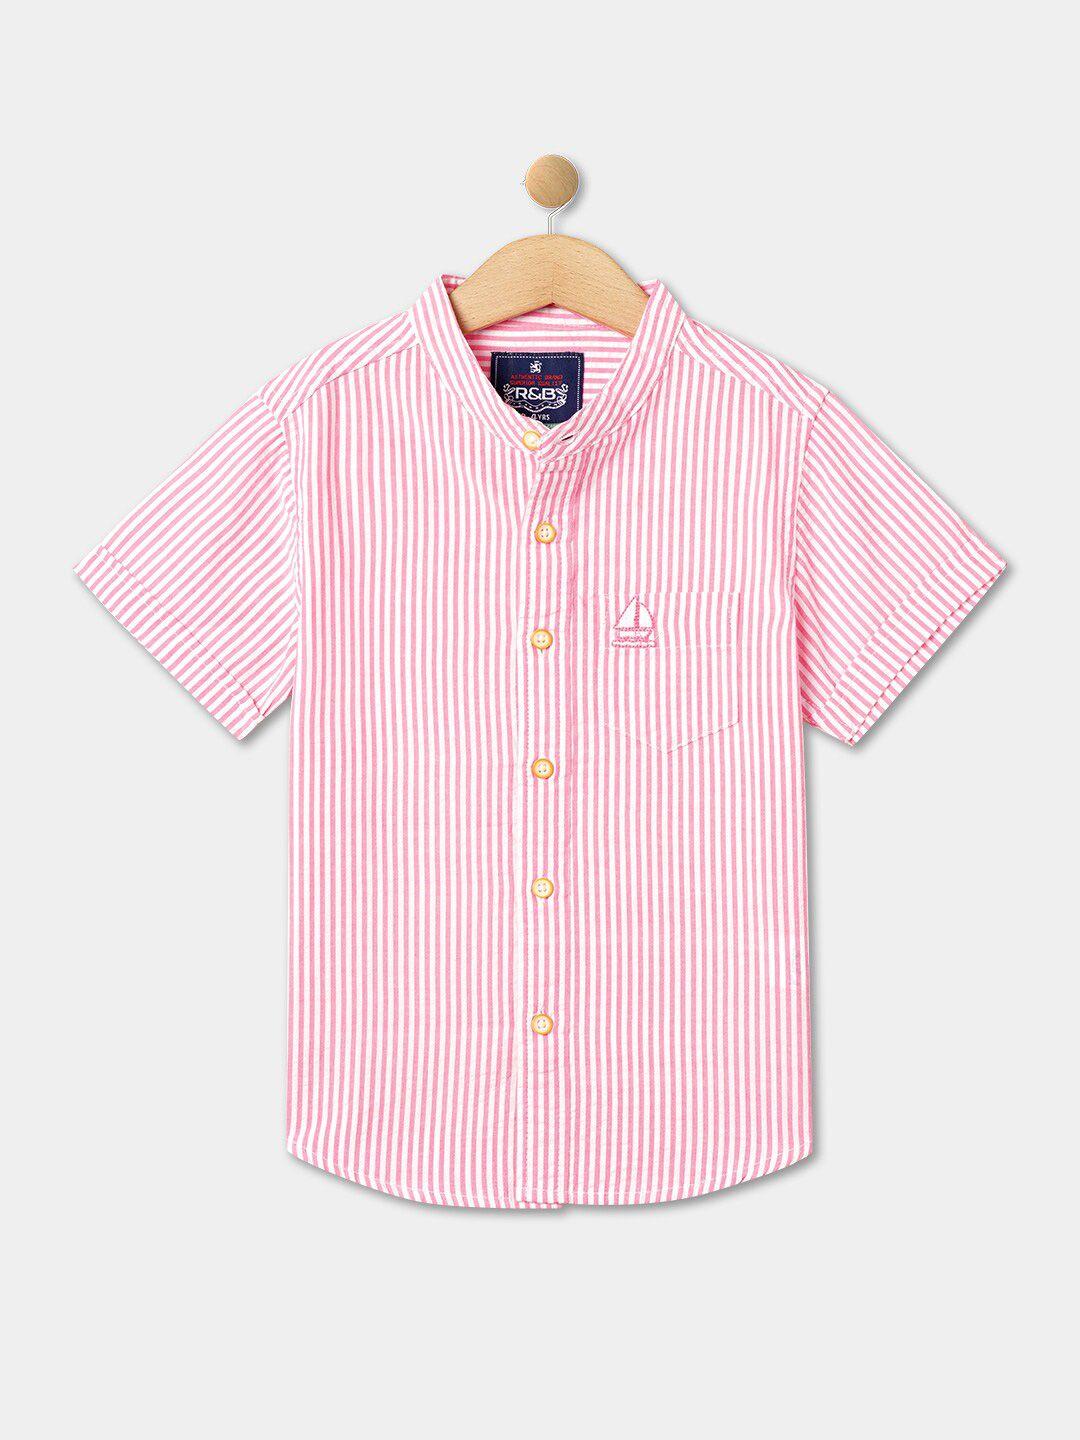 r&b-boys-striped-cotton-casual-shirt